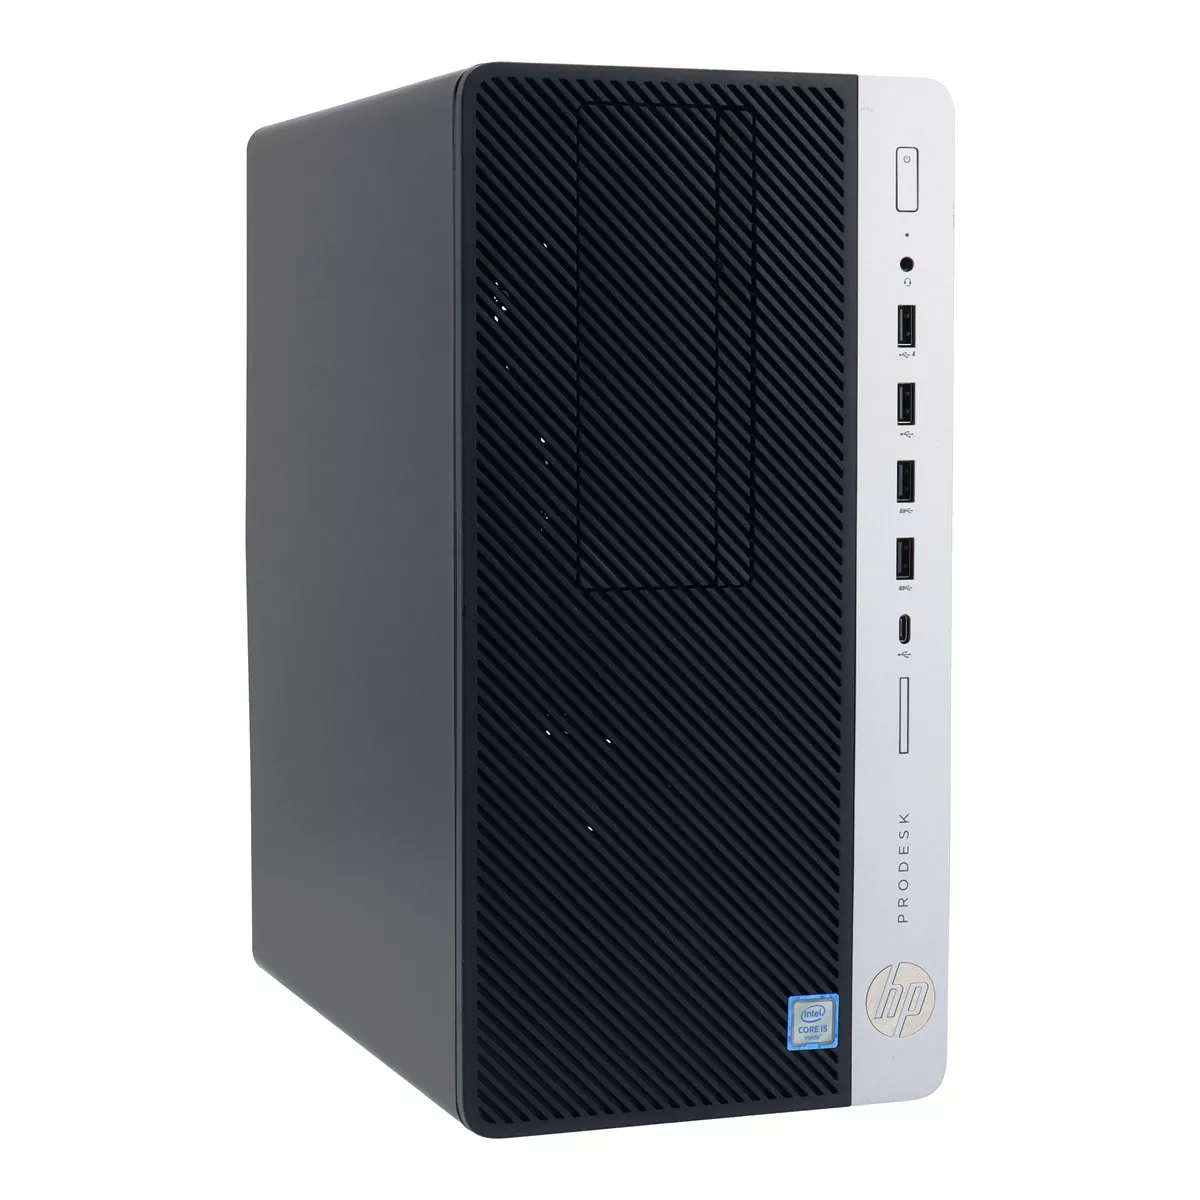 HP ProDesk 600 G3 Minitower Core i5 6500 3,2 GHz 8 GB 240 GB SSD B